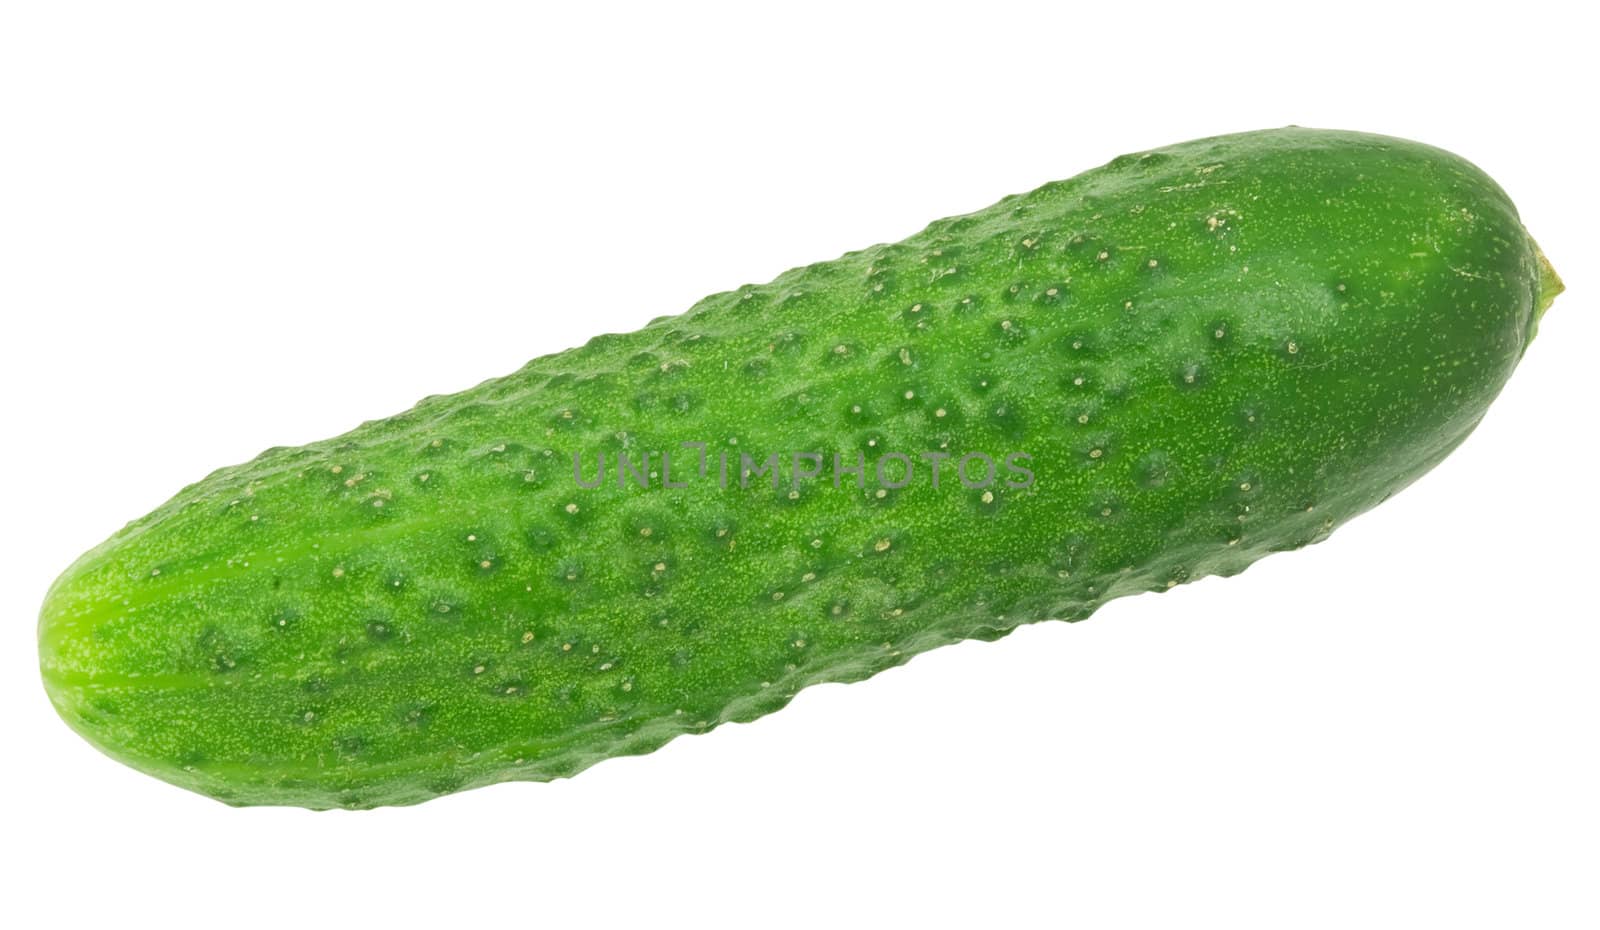 Cucumber by Zloneg